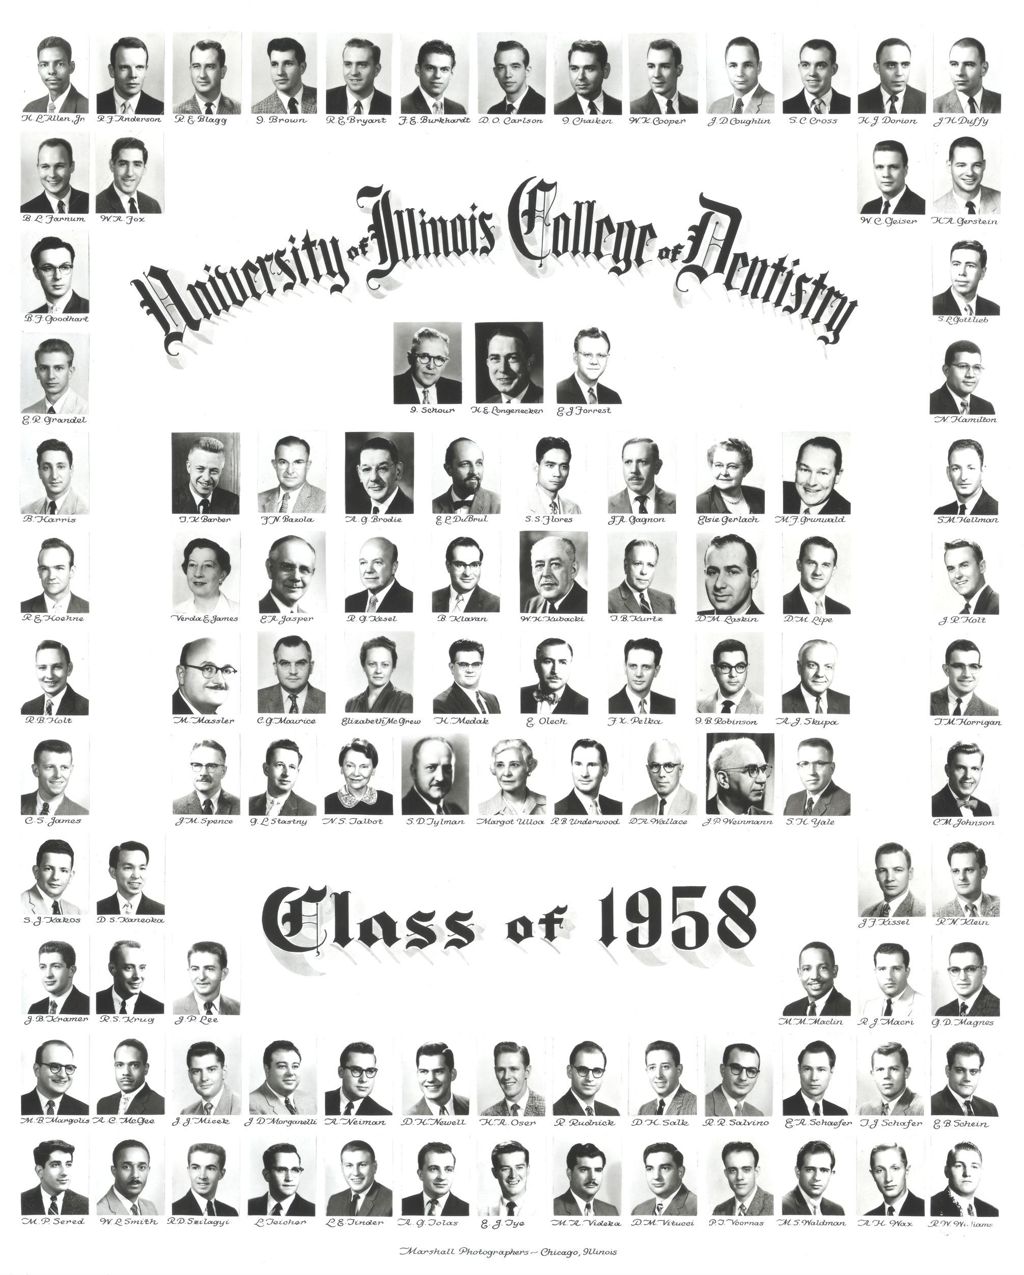 1958 graduating class, University of Illinois College of Dentistry